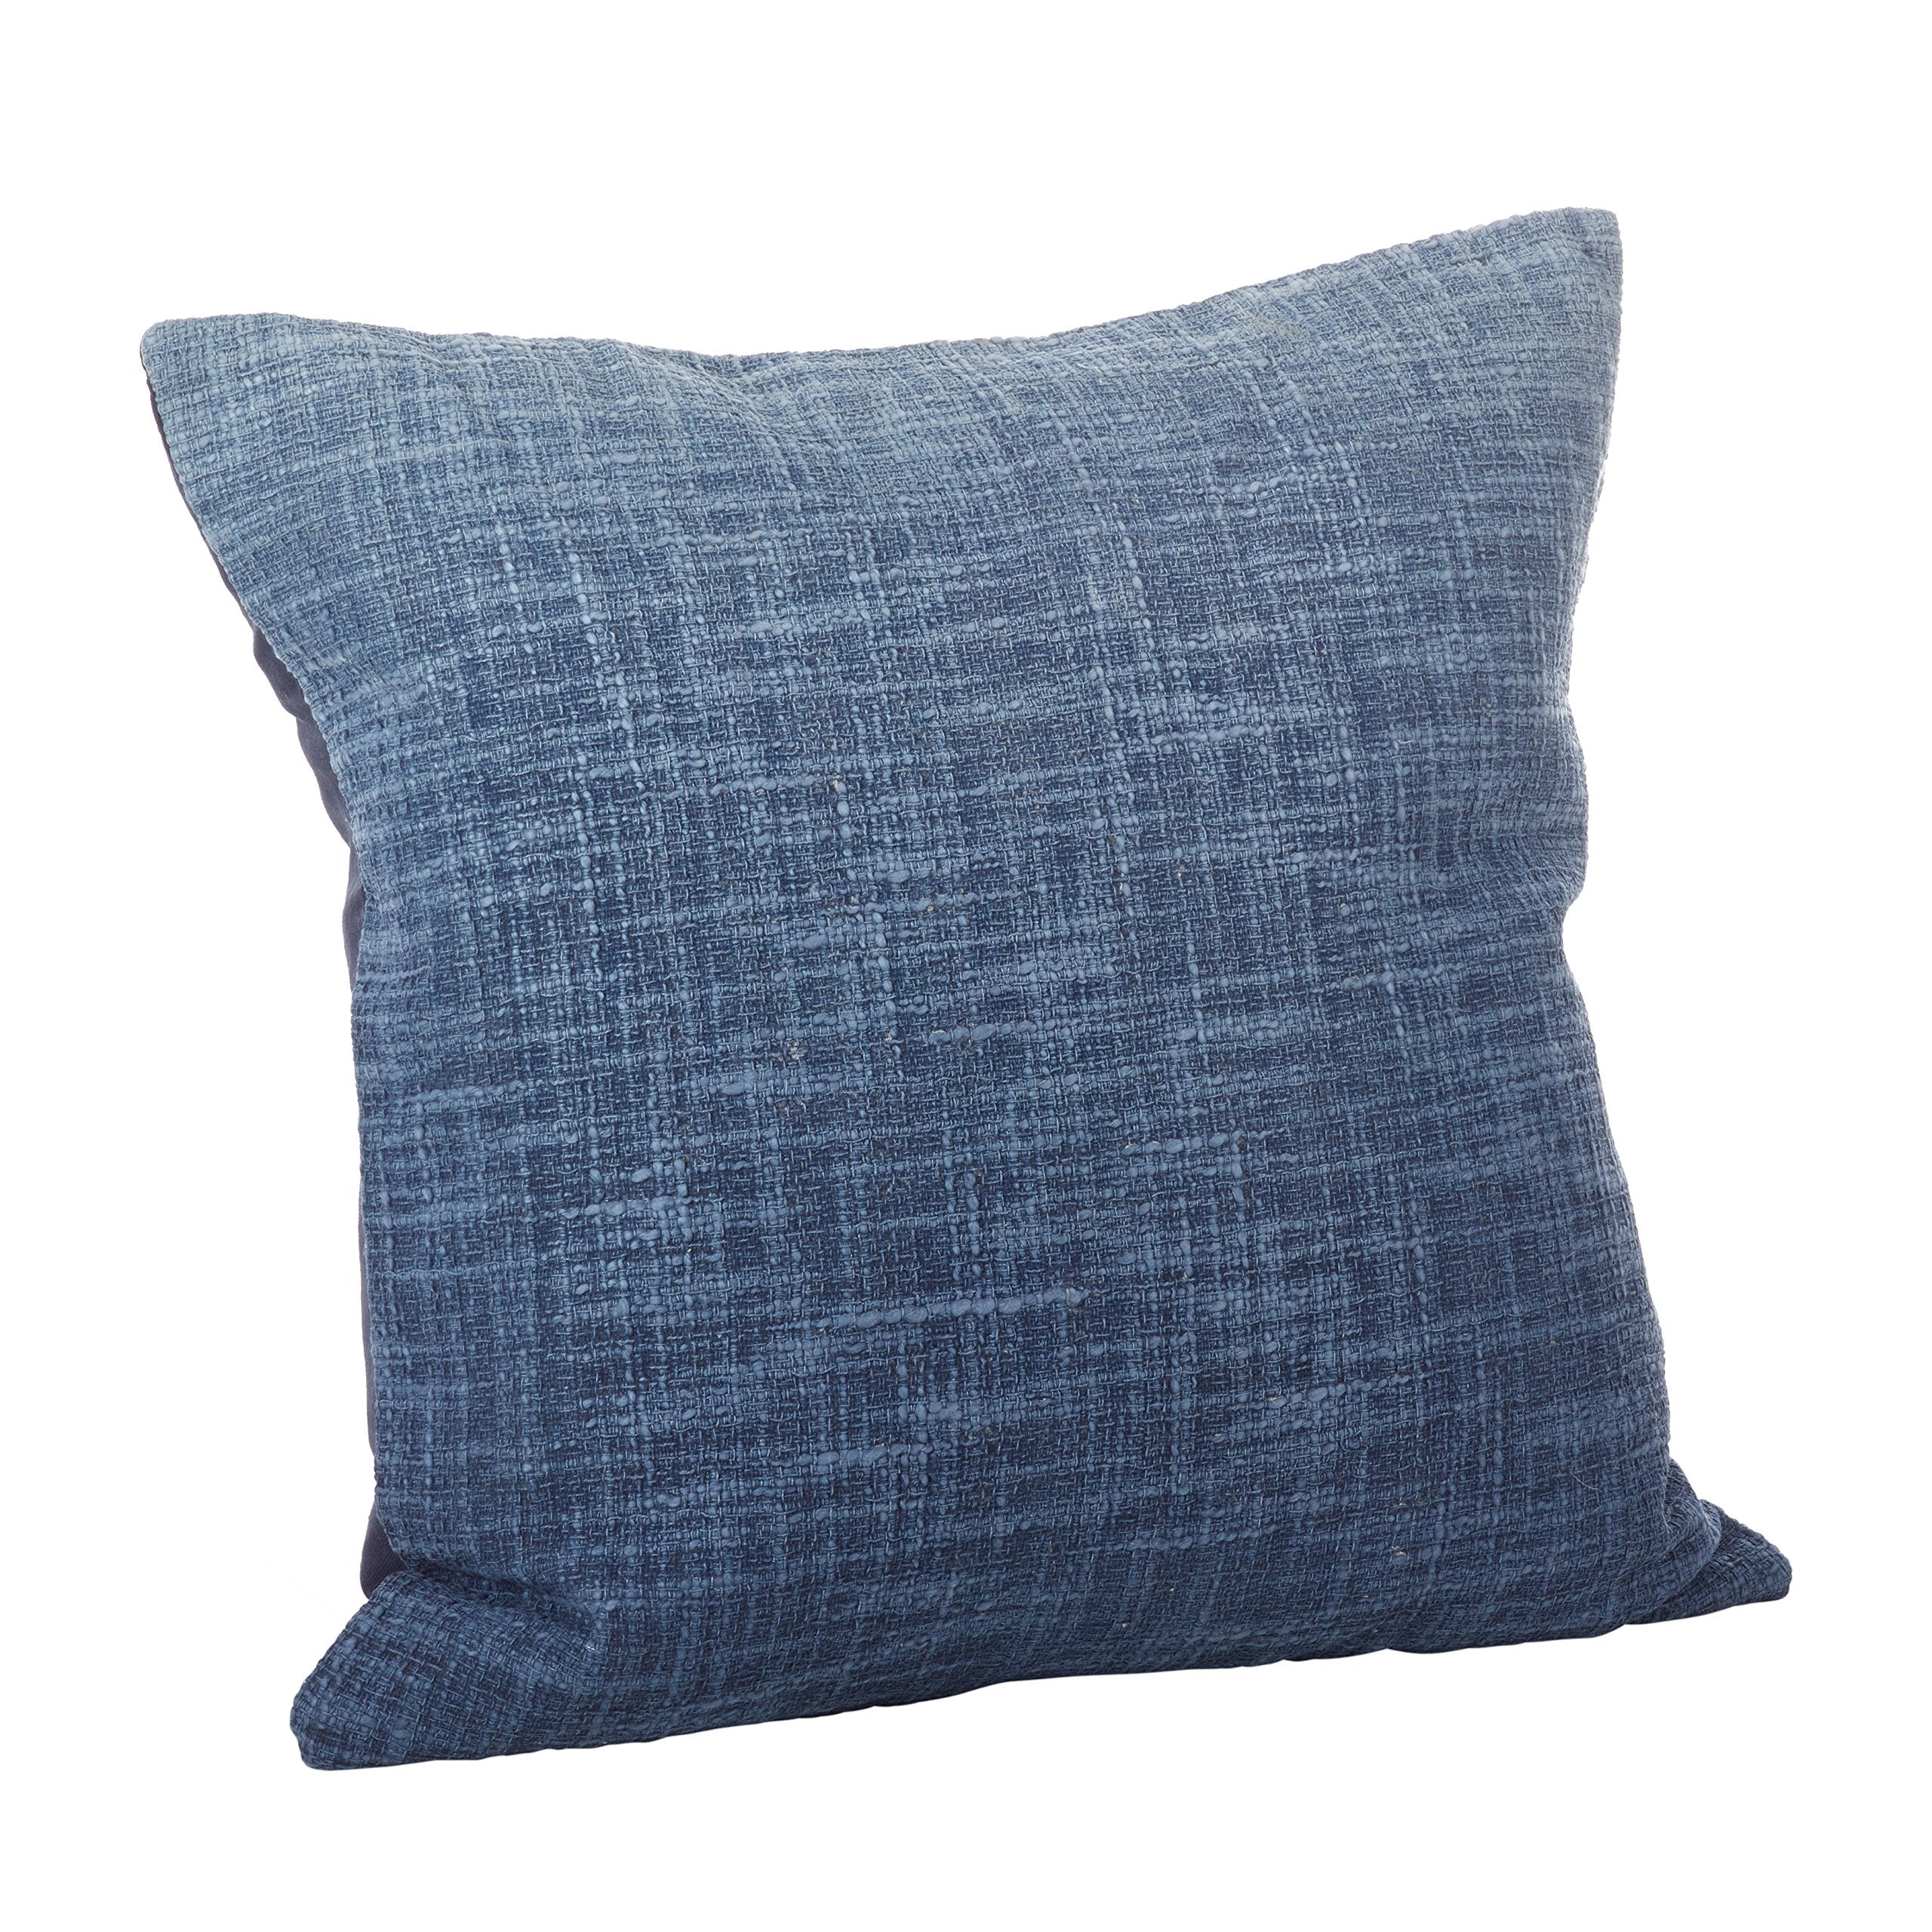 Navy Blue Ombre Design Pillow